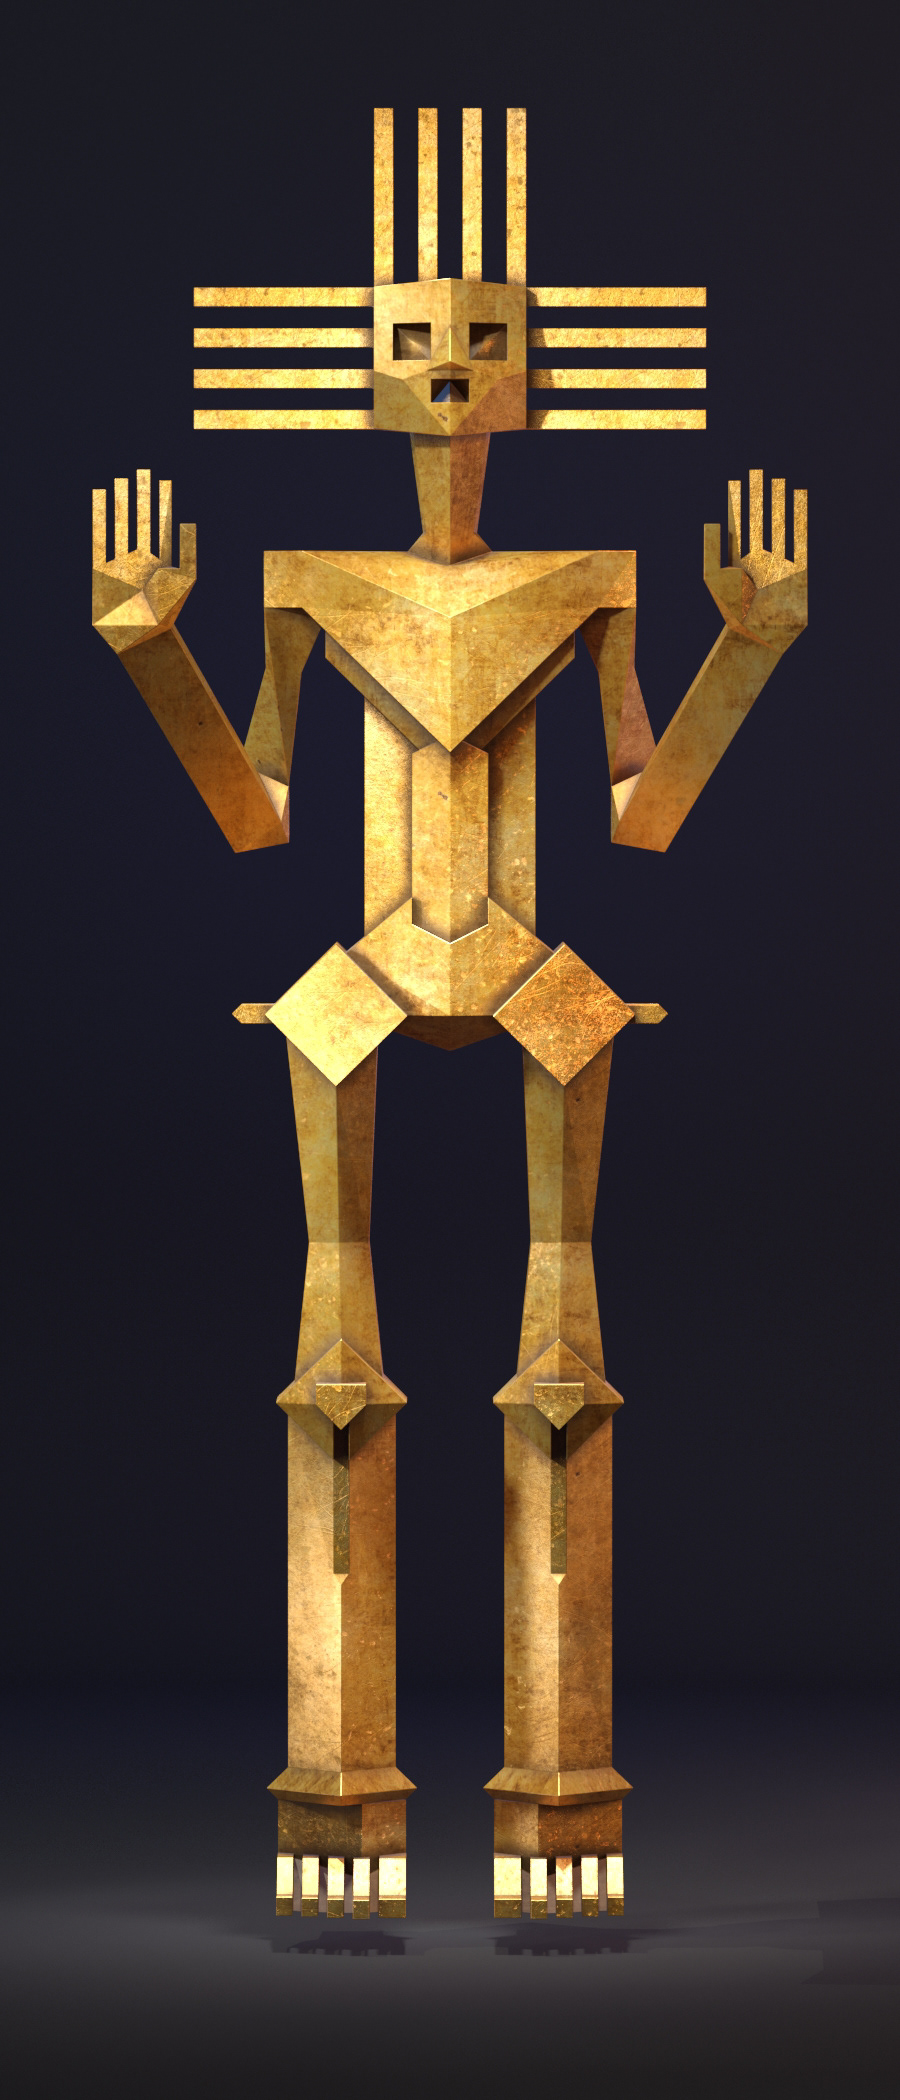 3D 3ds max artifact atacama gold mindák Render sculpture statue